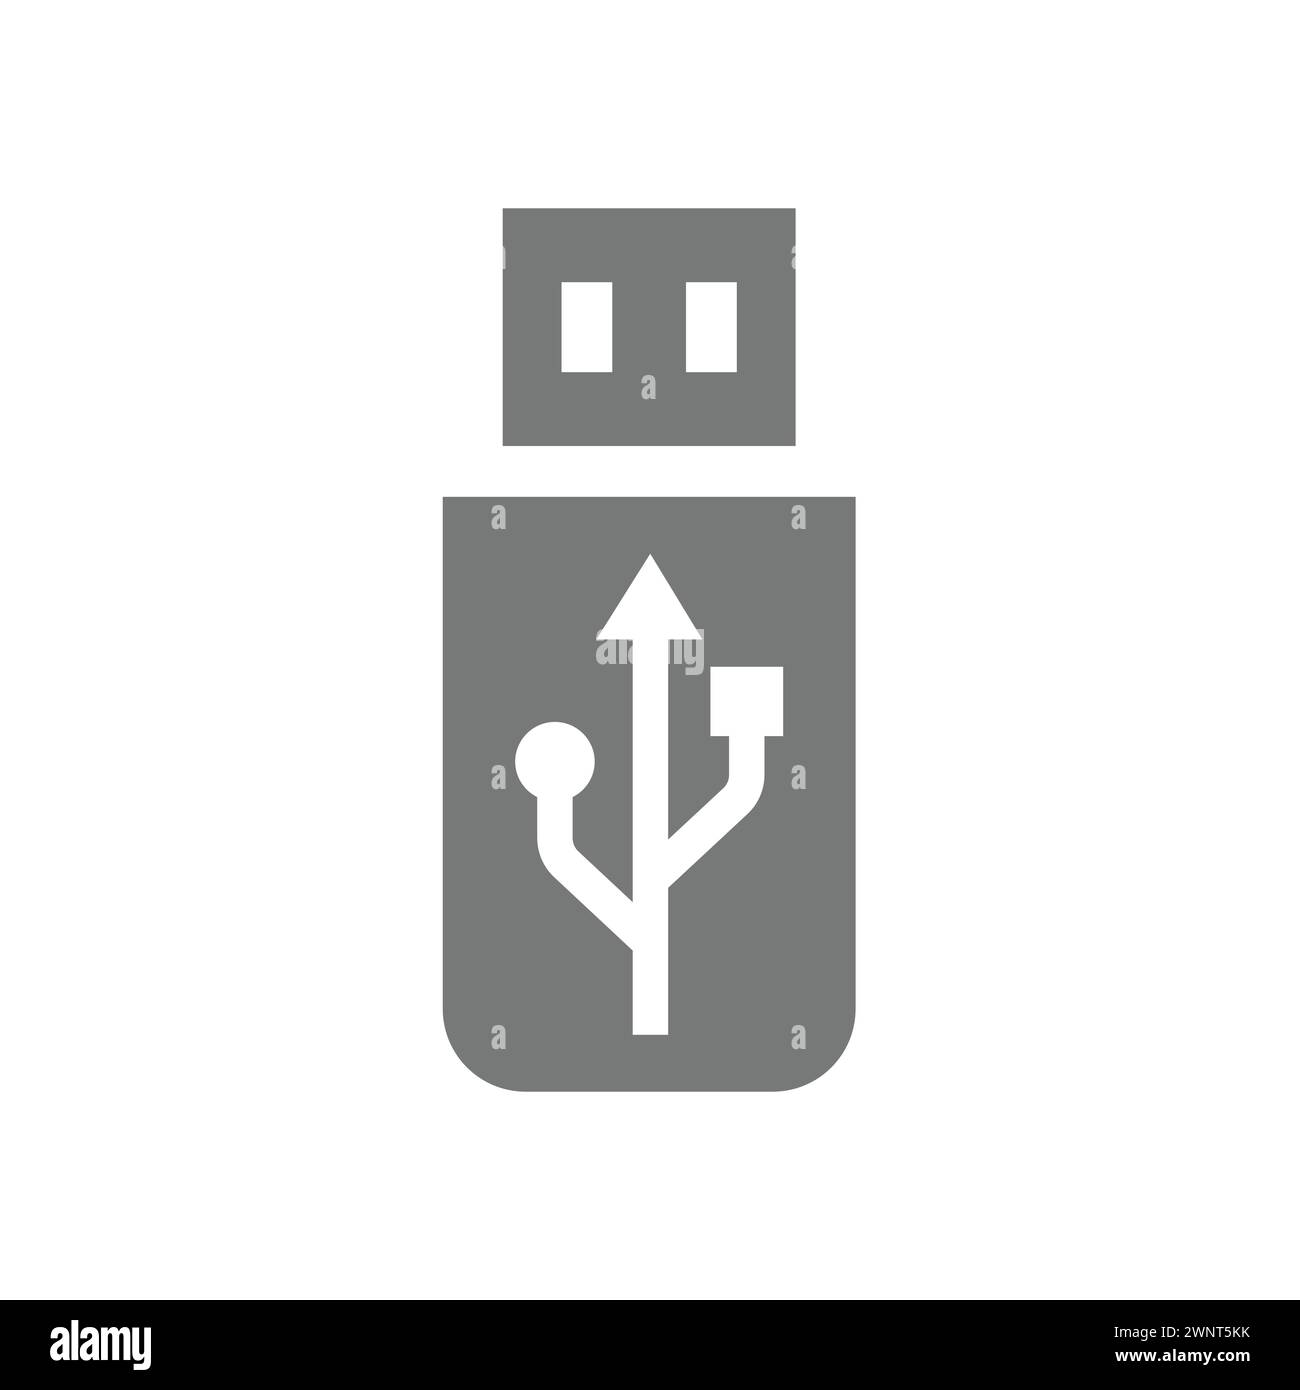 Usb flash drive vector icon. Simple computer device symbol. Stock Vector